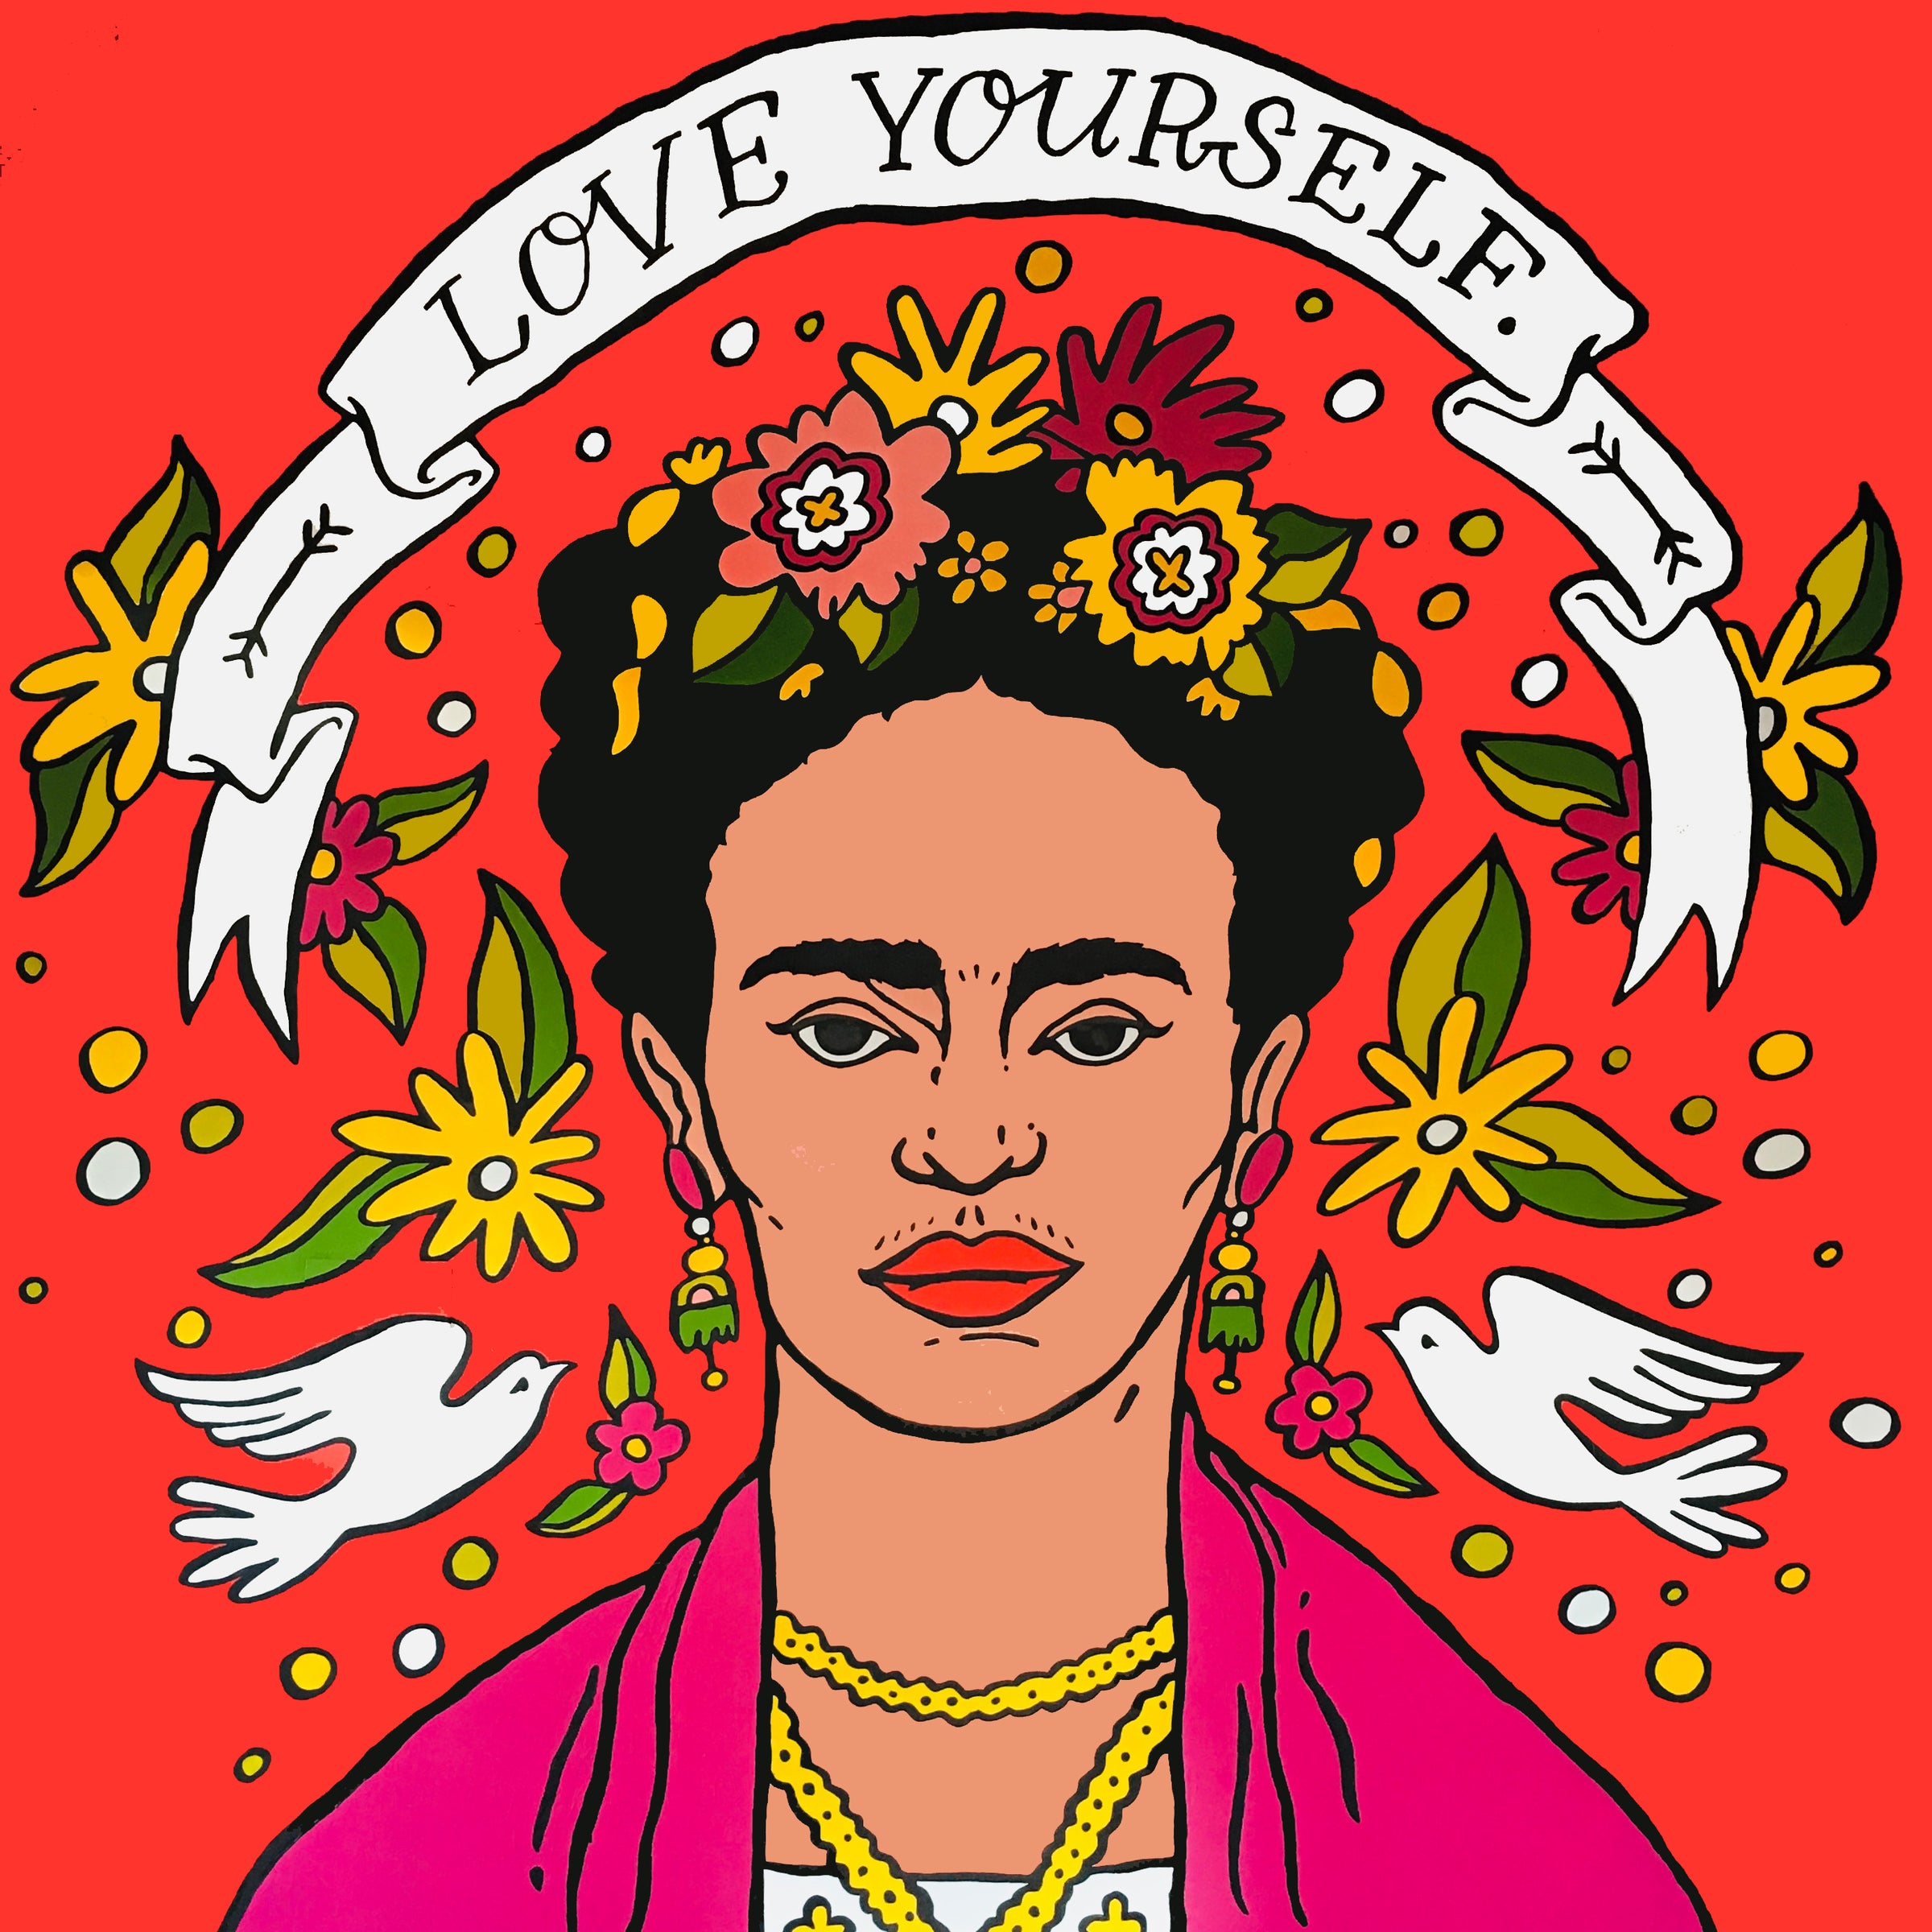 "Love Yourself" Frida Kahlo mural.